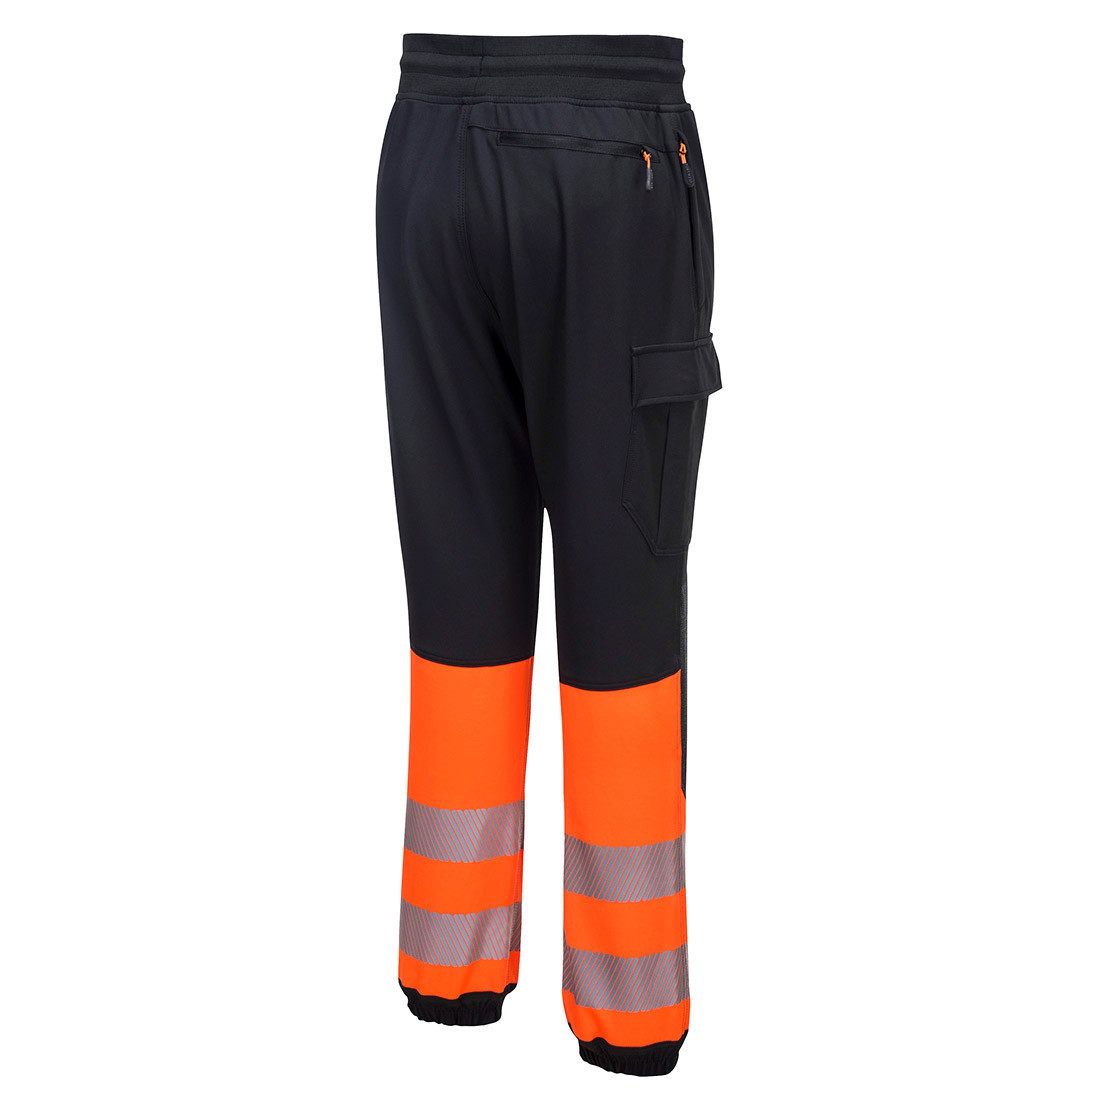 Pantaloni HI VIS Flexi gama KX3 - Imbracaminte de protectie